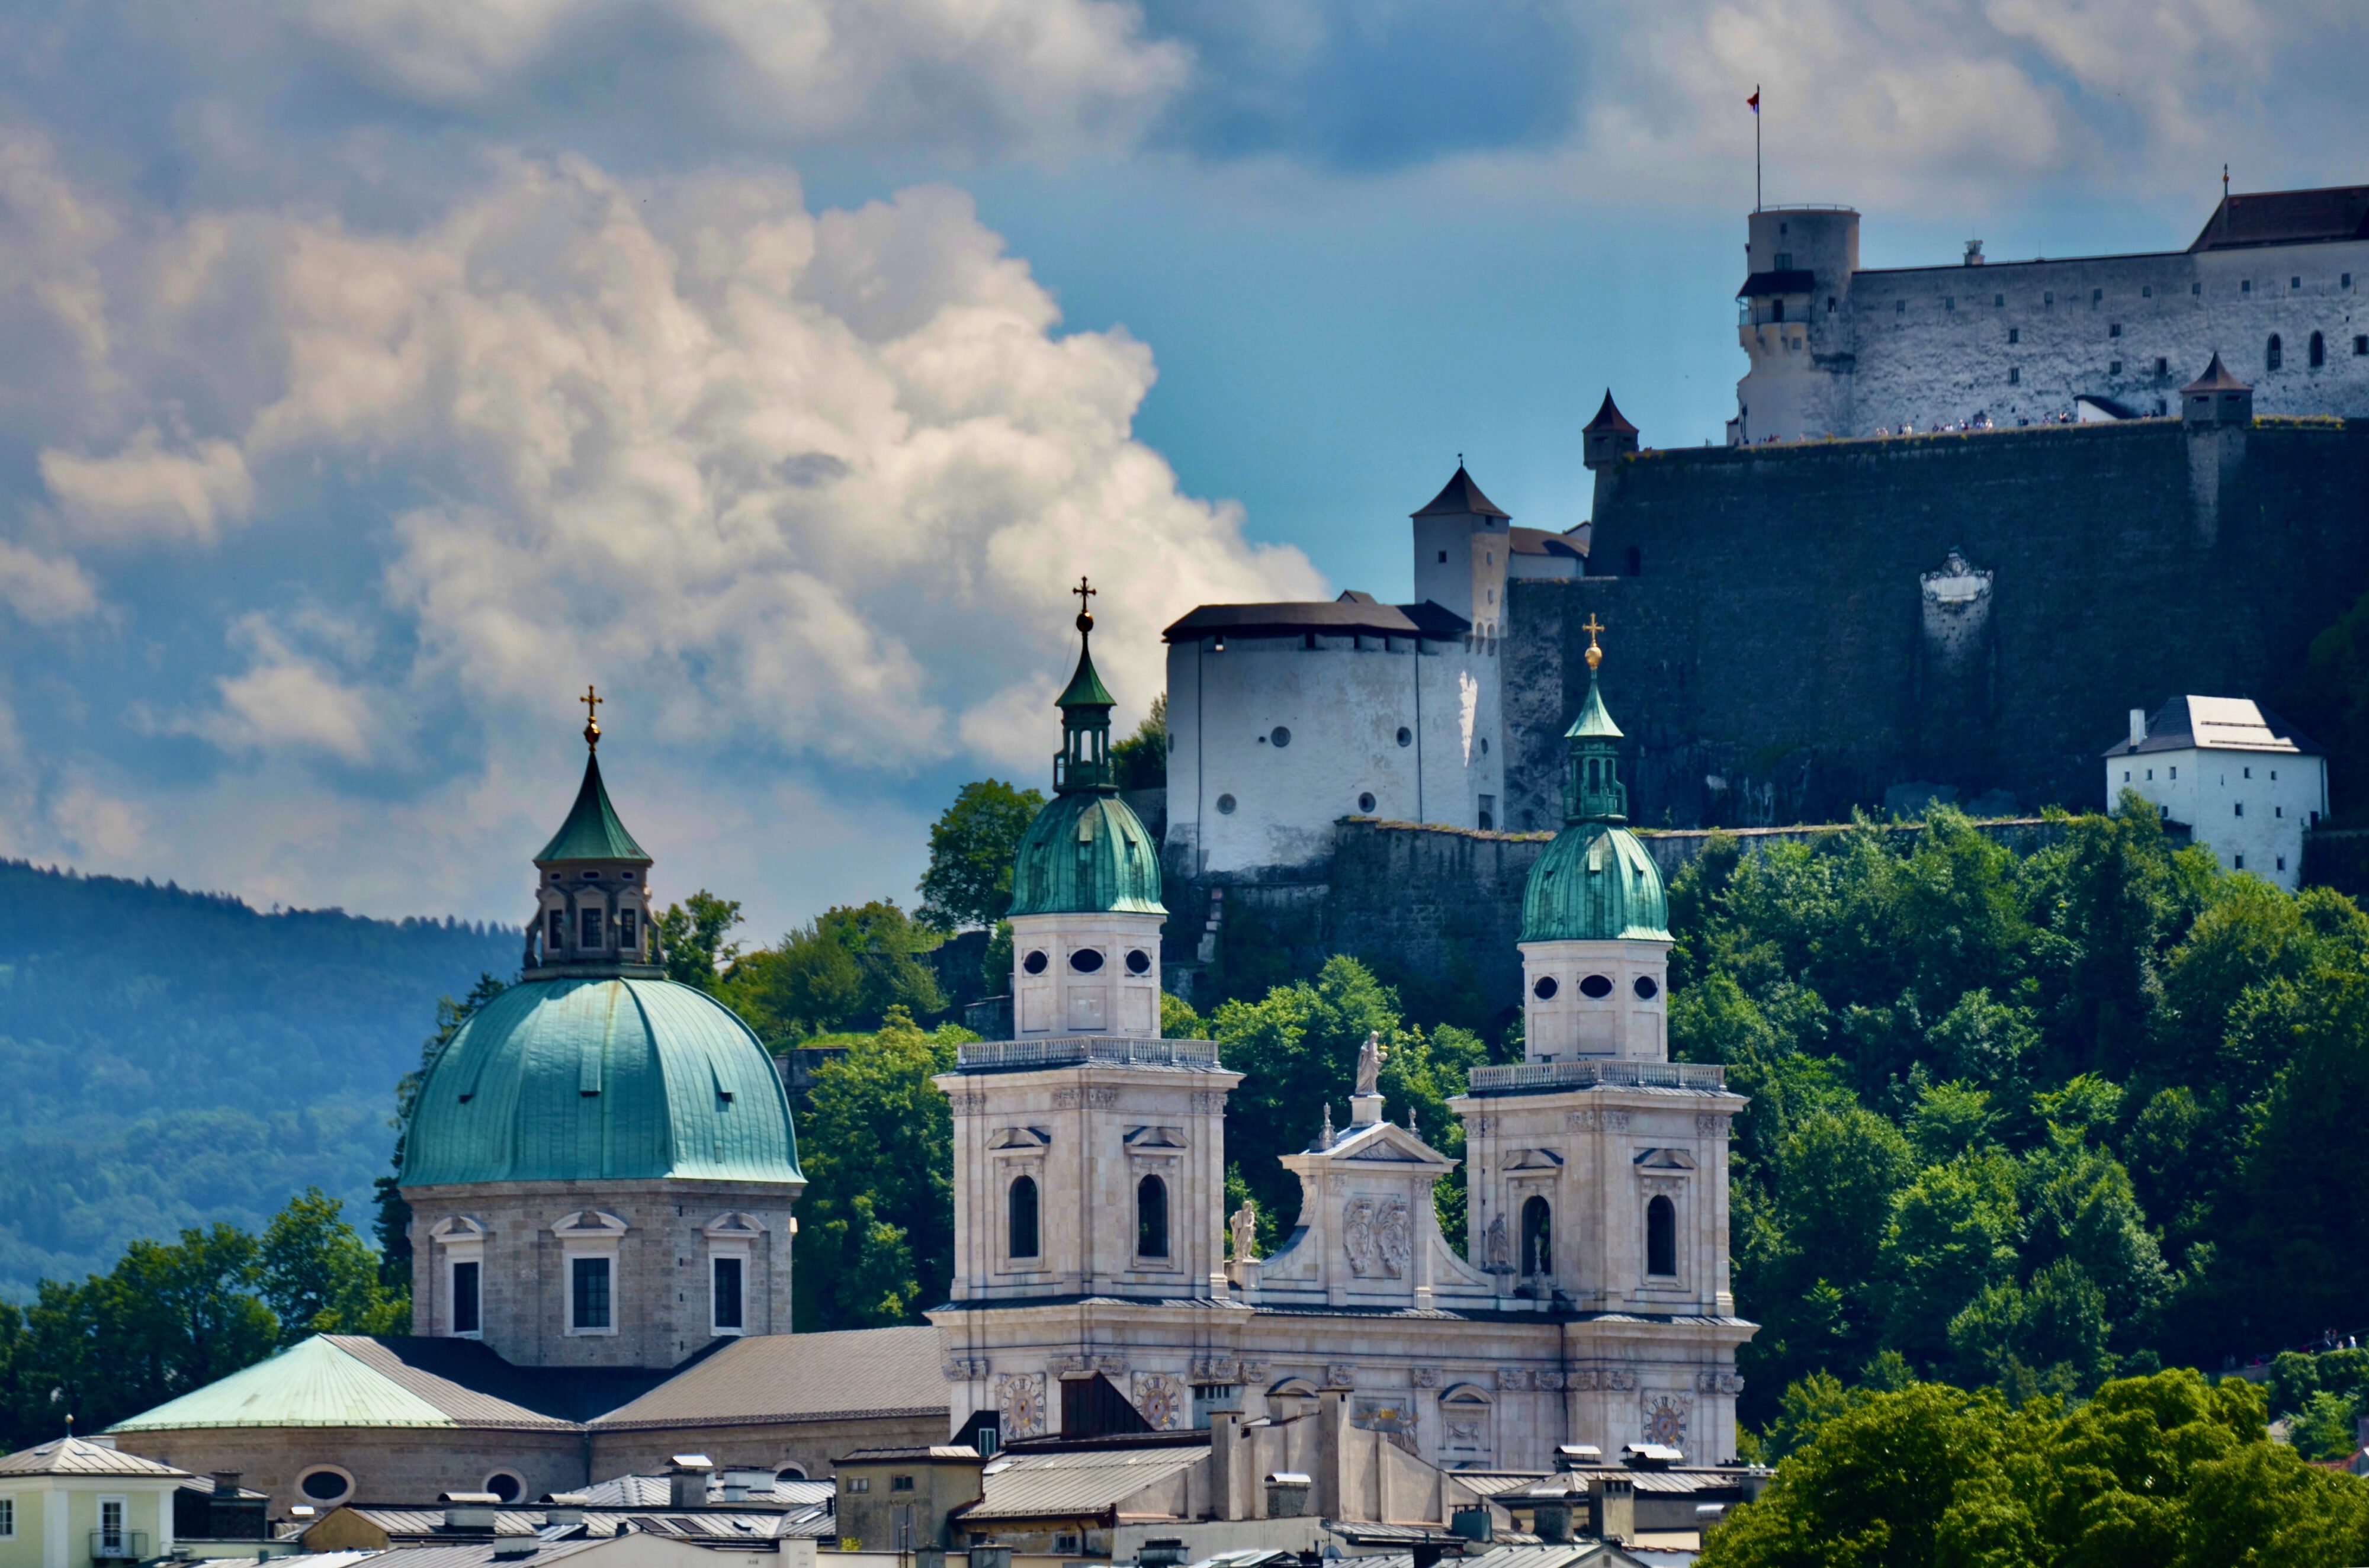 Dome of Salzburg